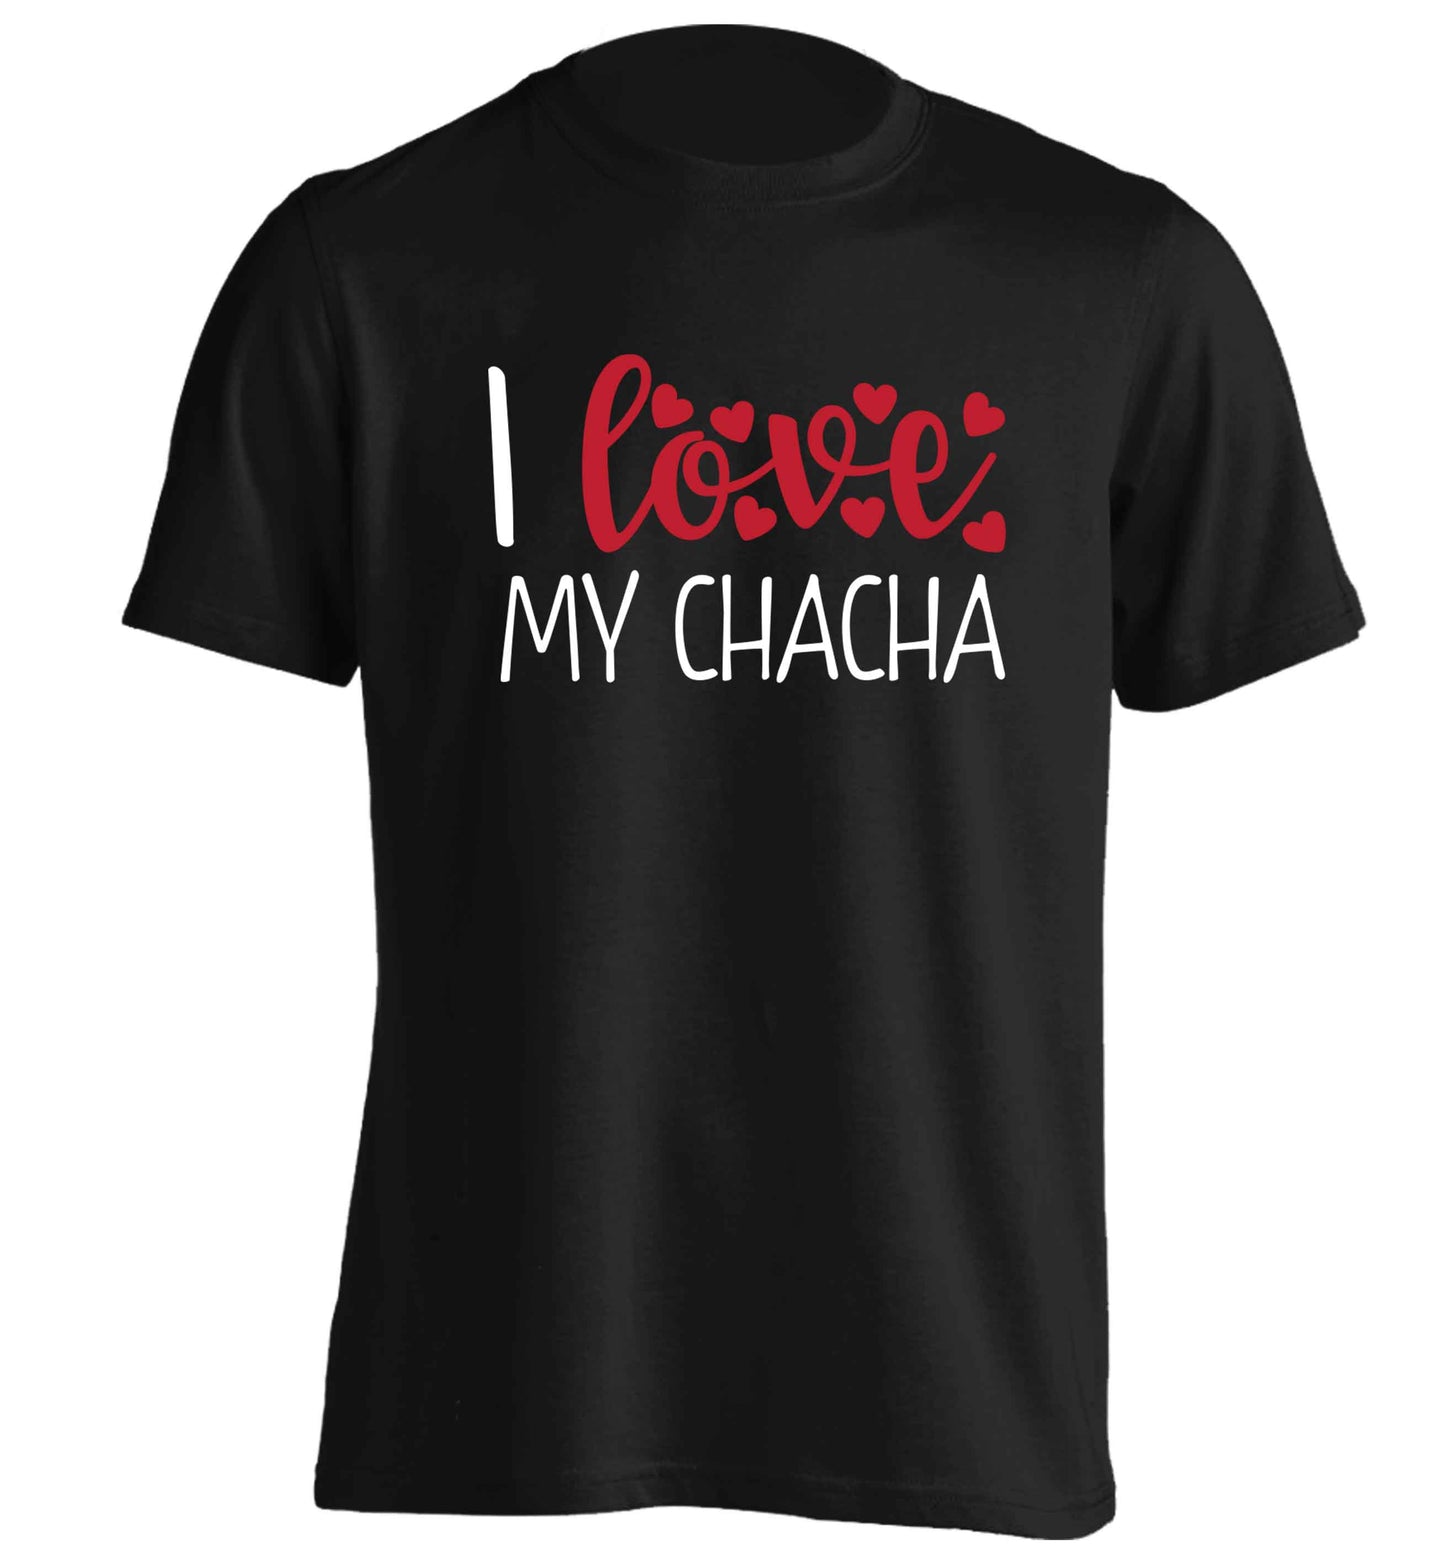 I love my chacha adults unisex black Tshirt 2XL